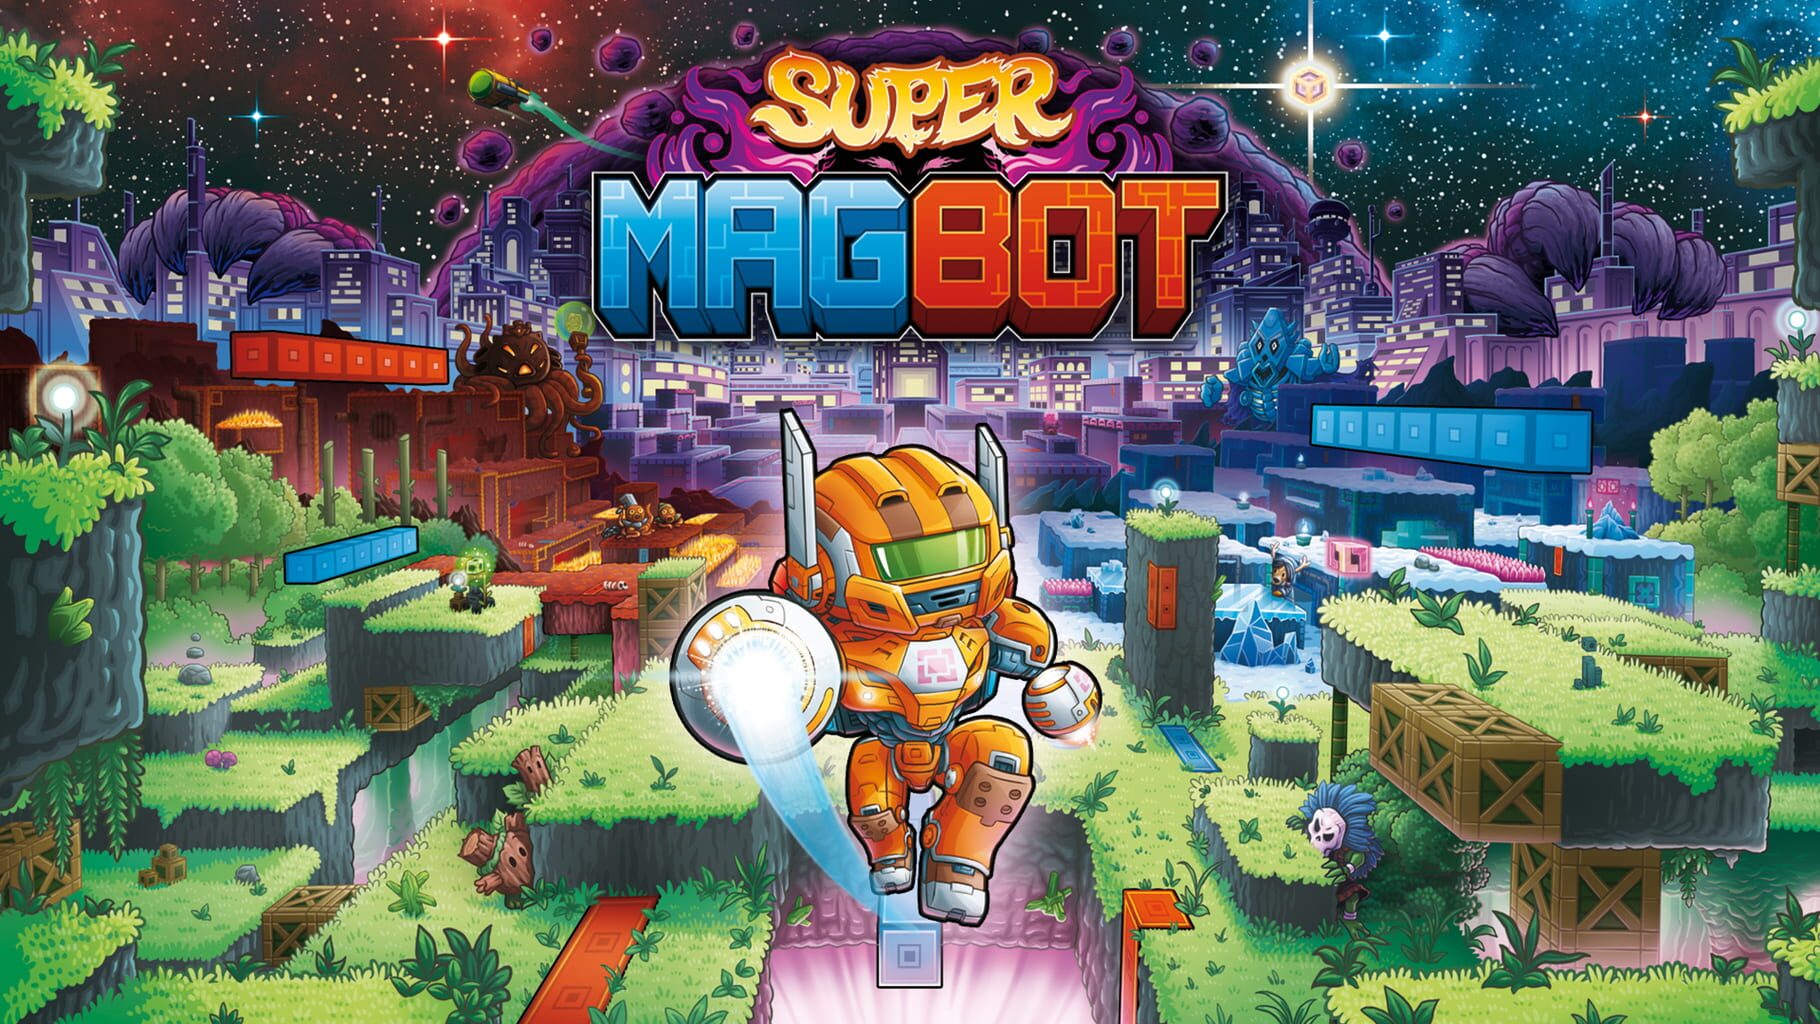 Super Magbot artwork